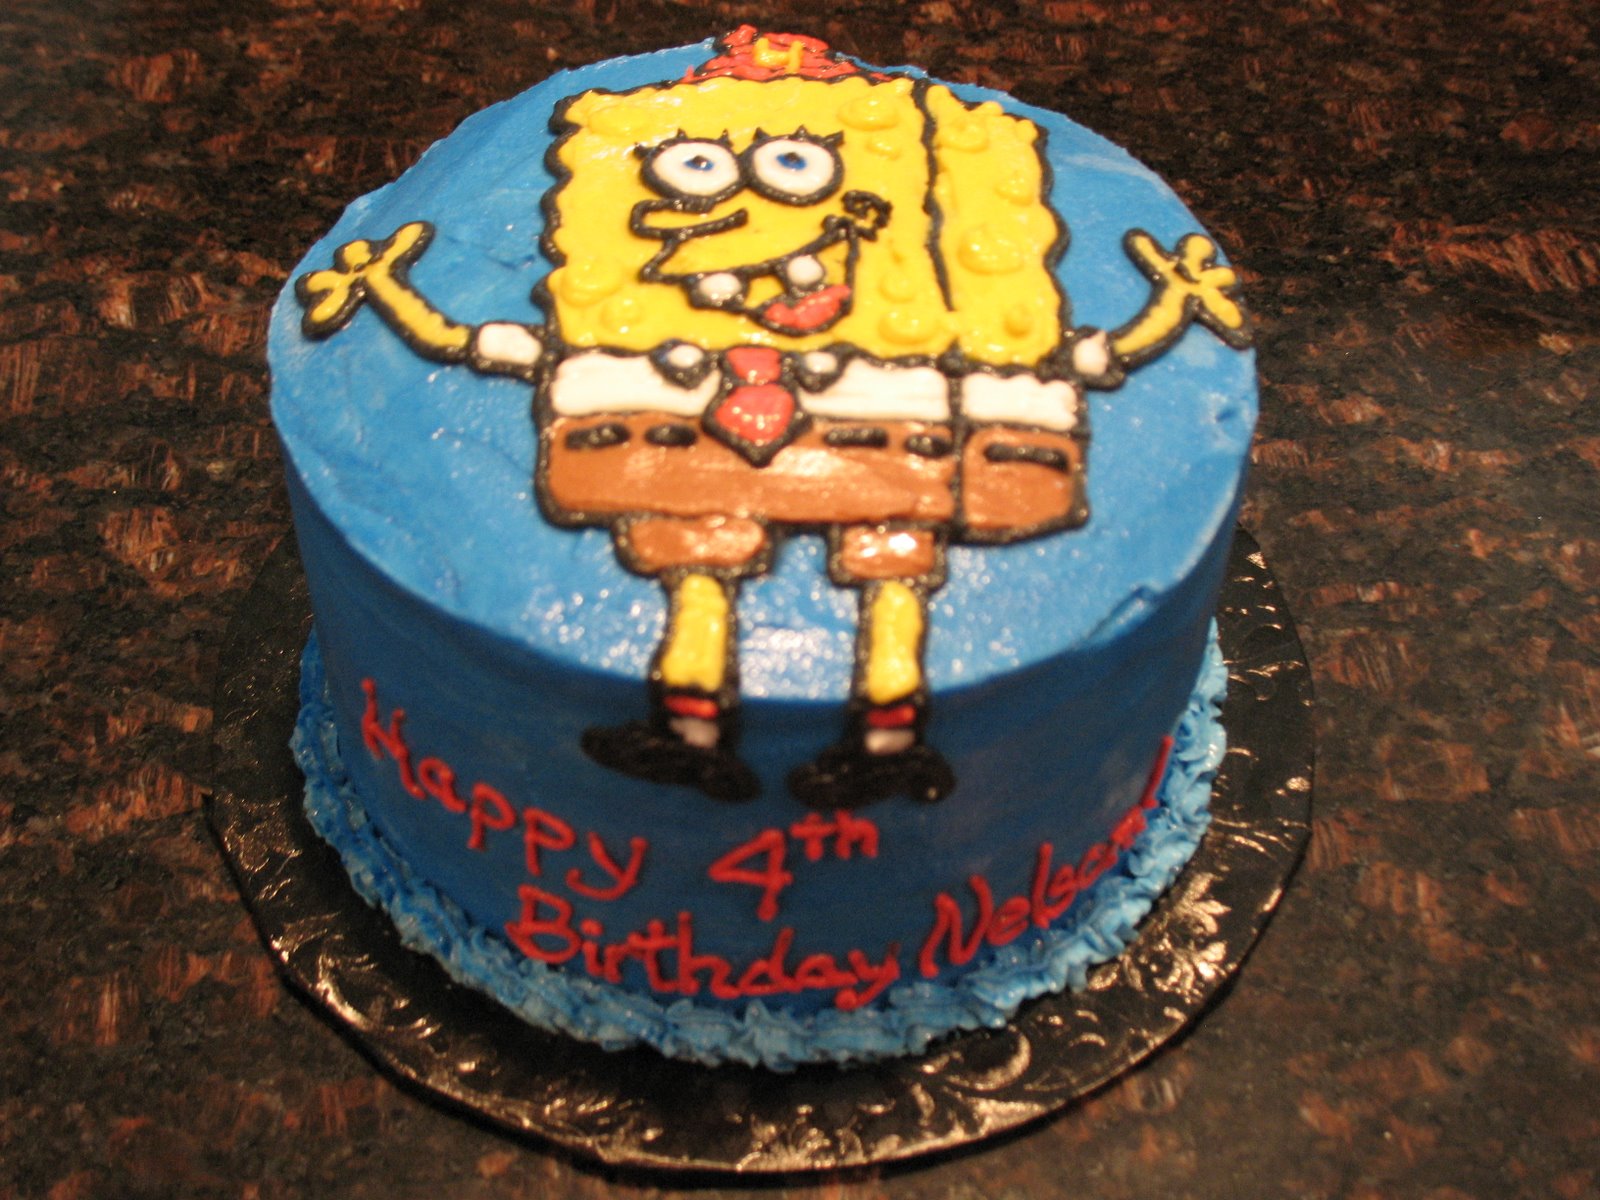 spongebob+cake.jpg.